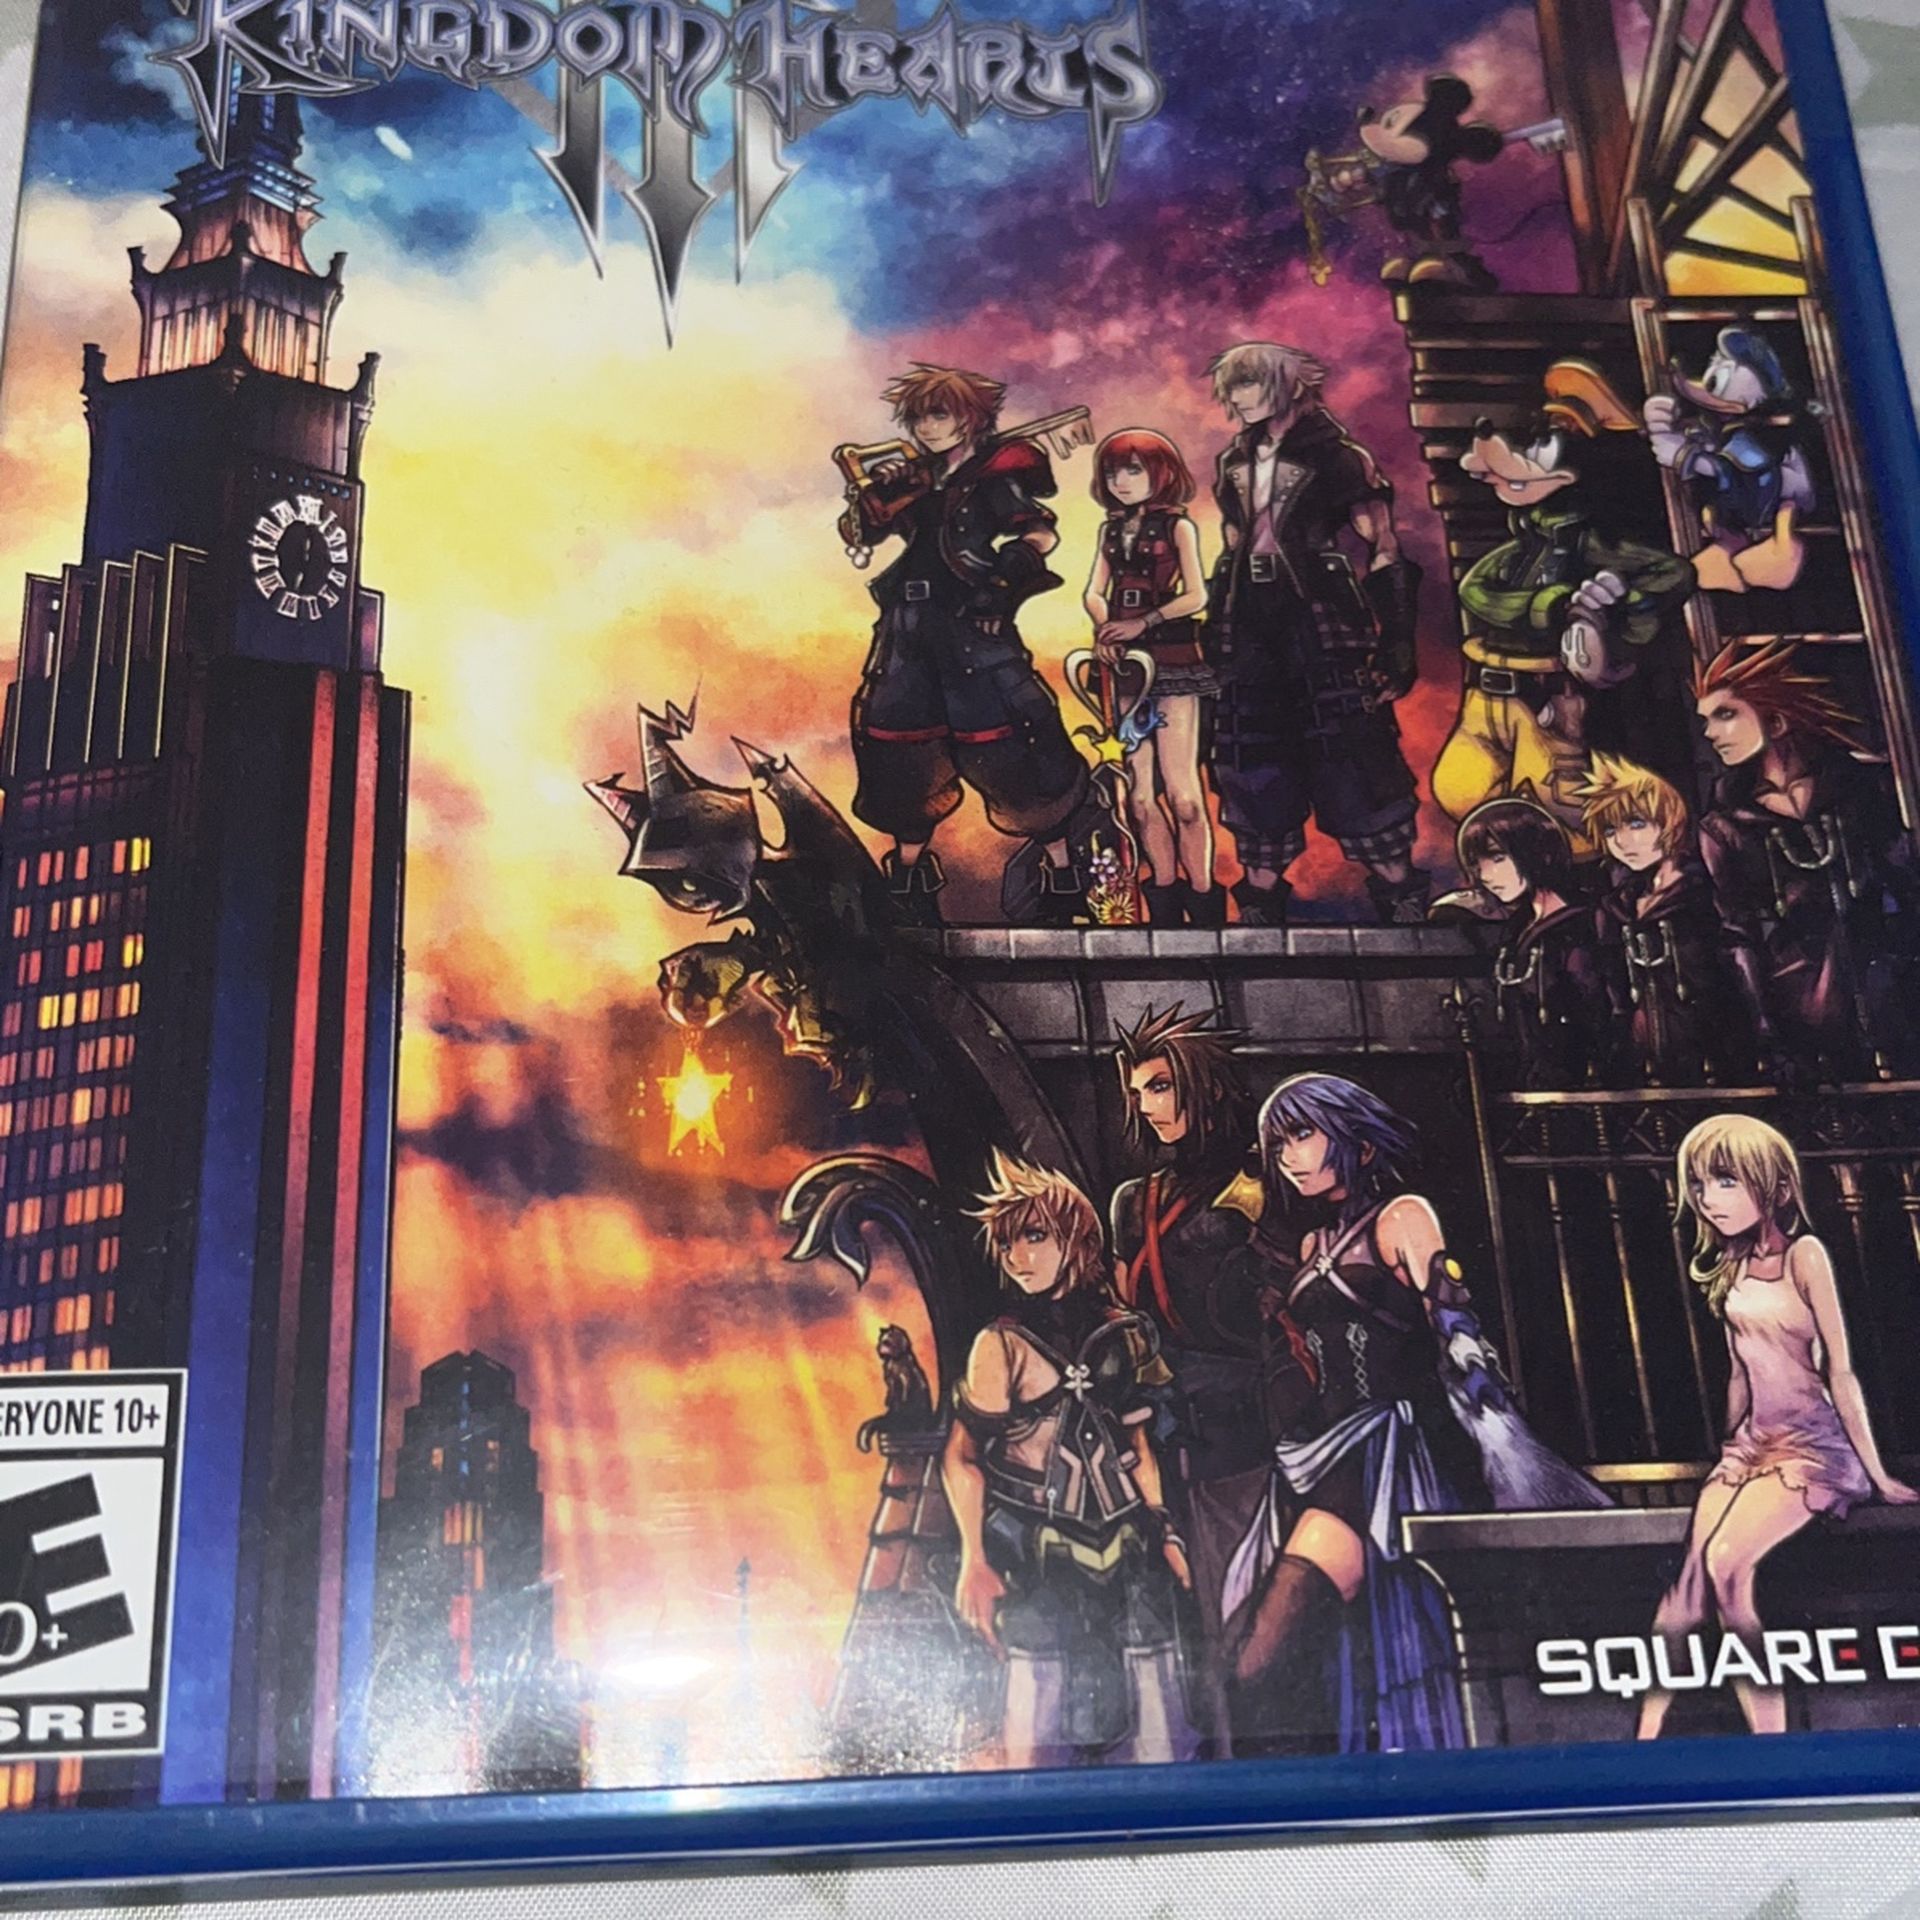 ps4 game Kingdom Hearts